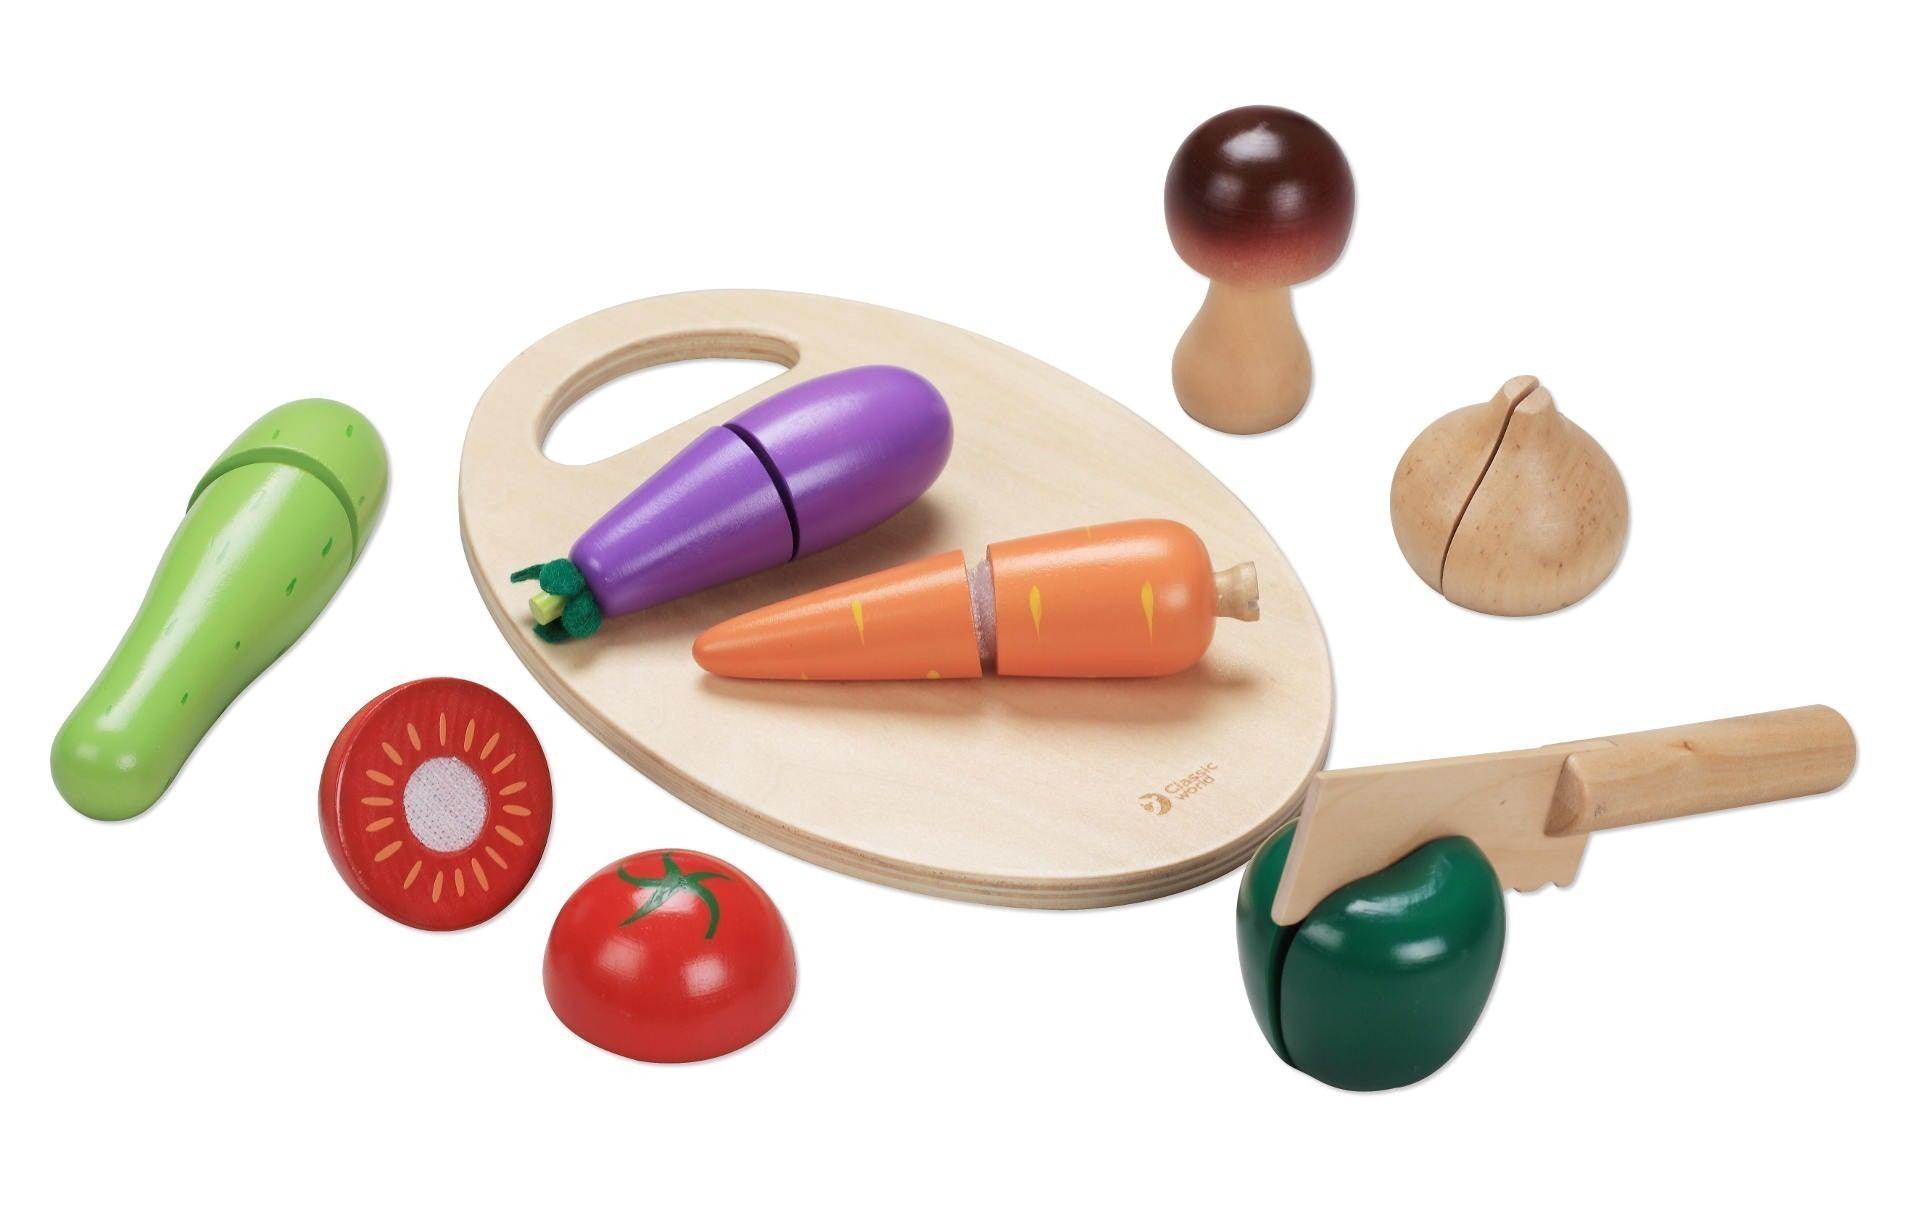 Children's Wooden Cutting Kit - Vegetables - MoonyBoon